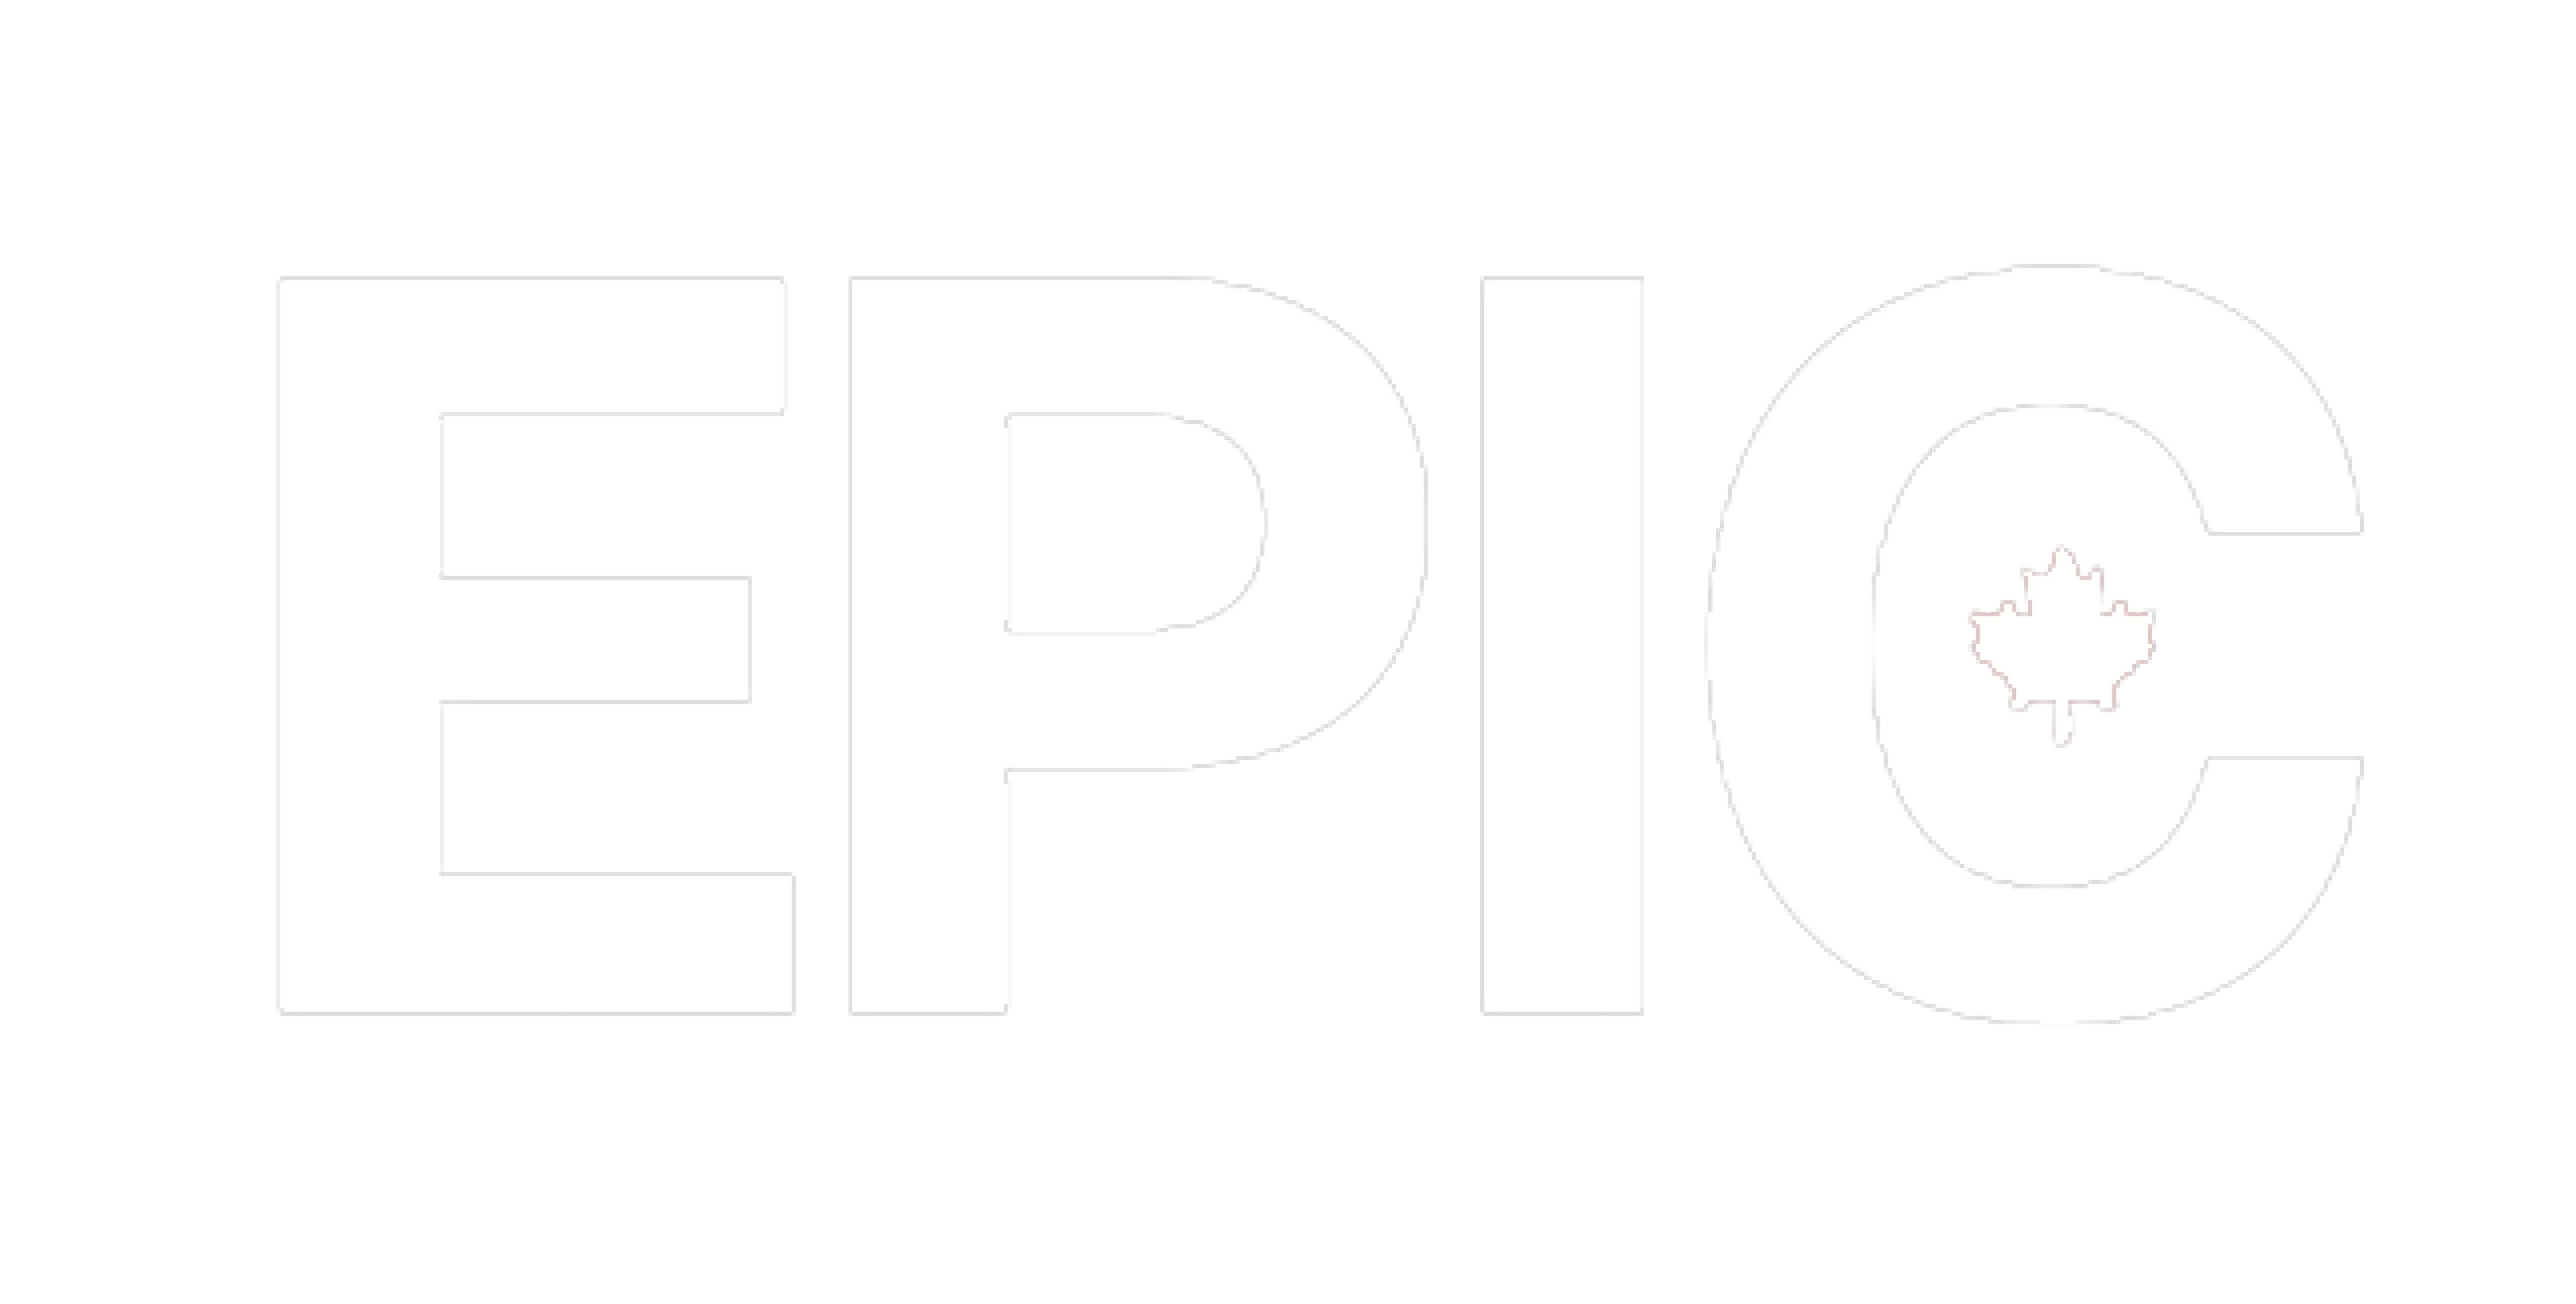 EPIC